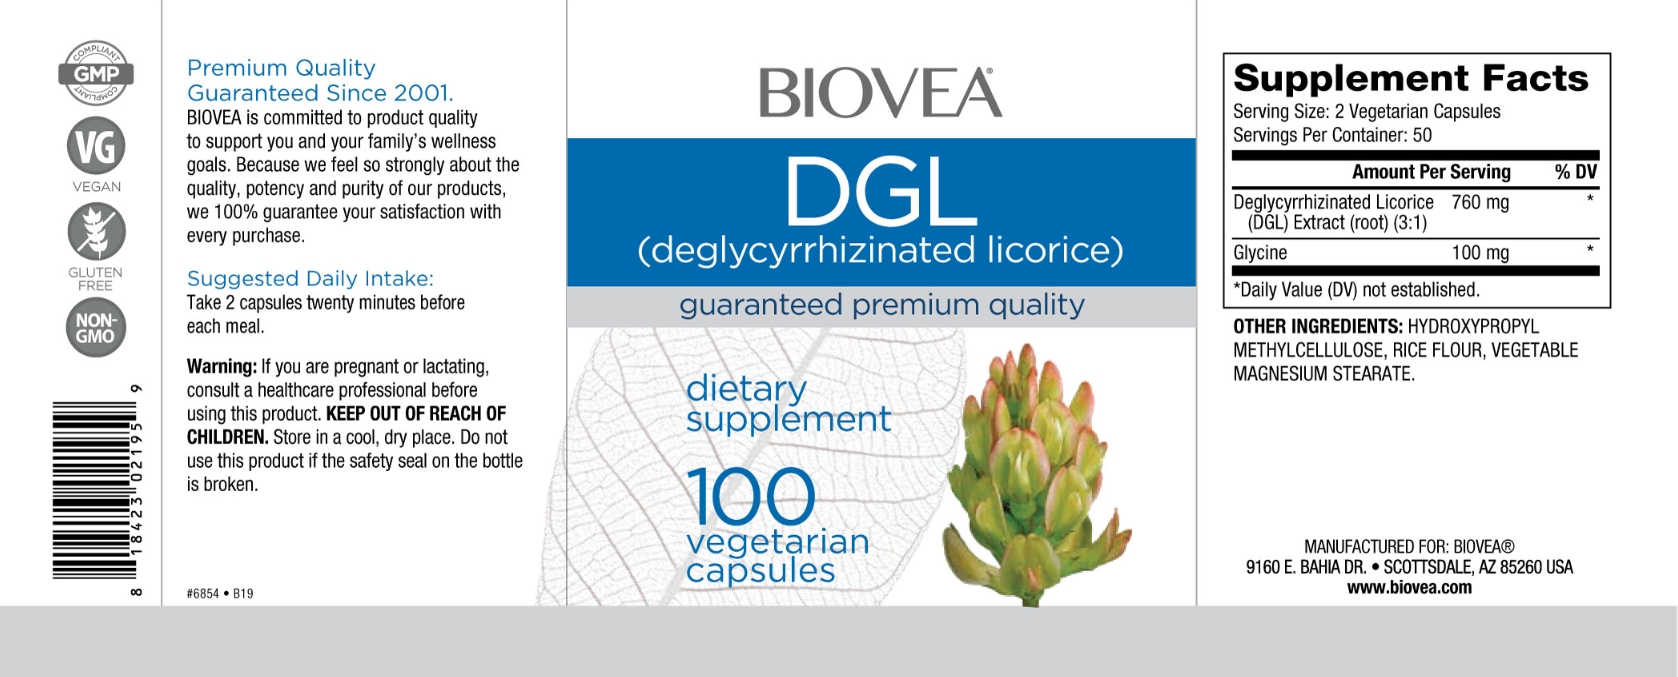 BIOVEA  DGL (De-Glycyrrhizinated Licorice) / 100 Vegetarian Capsules